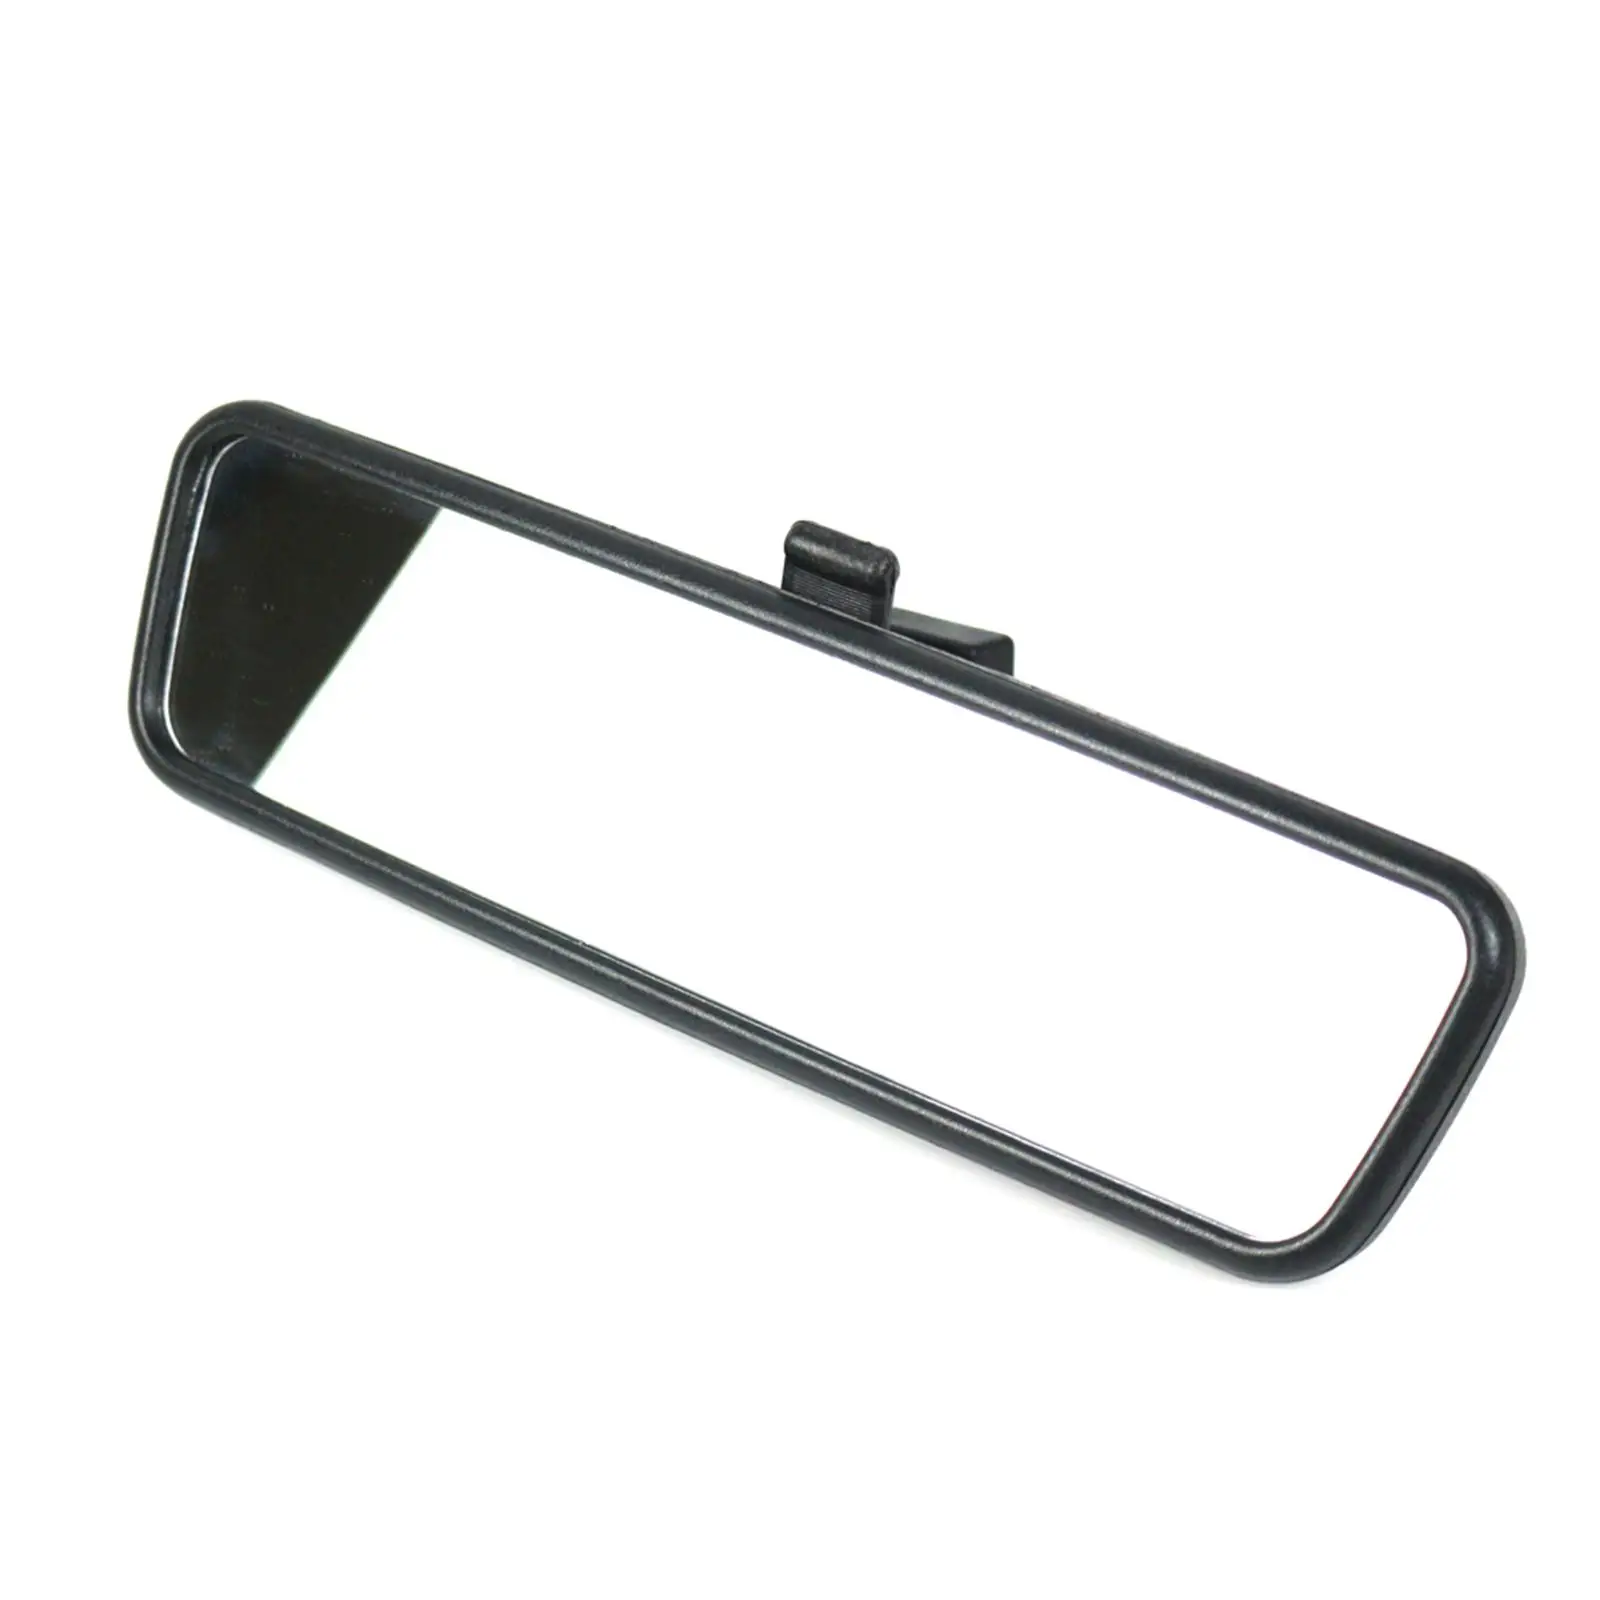 Interior Rear View Mirror 814842 Rearview Mirror for Citroen C1 Replaces Automobile Premium Durable